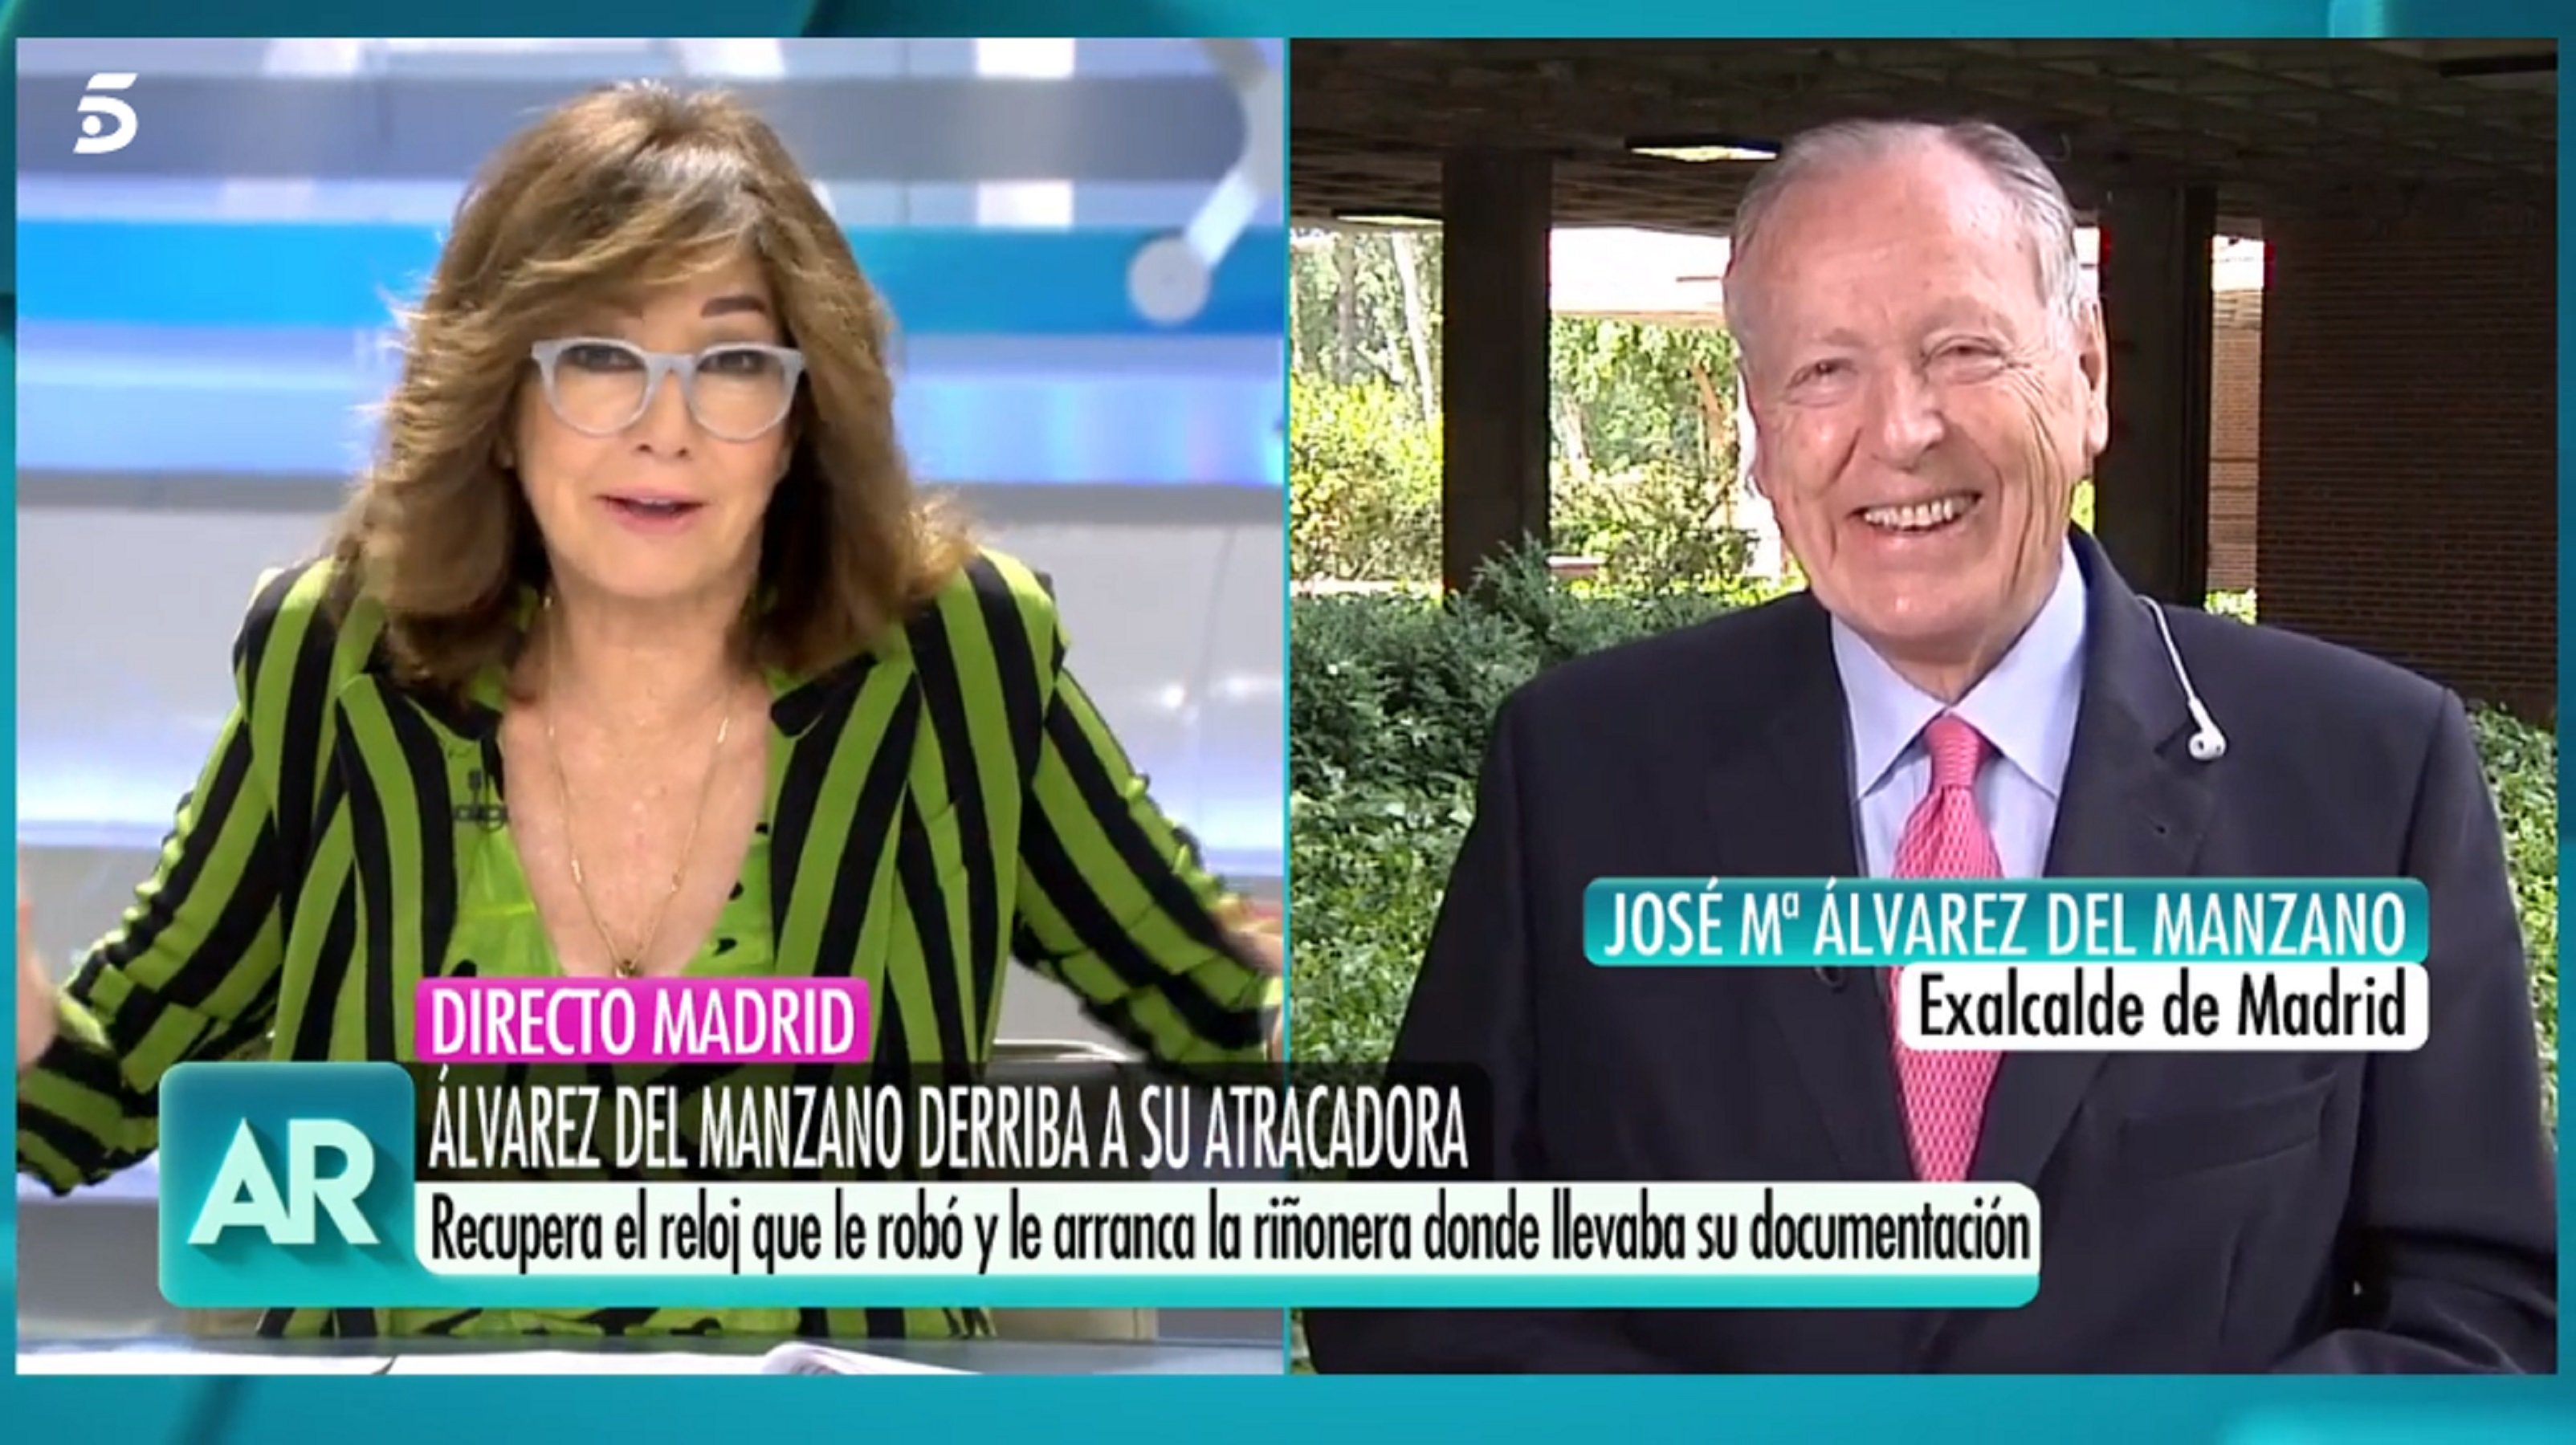 Ana Rosa Quintana Telecinco Alvarez del Manzano